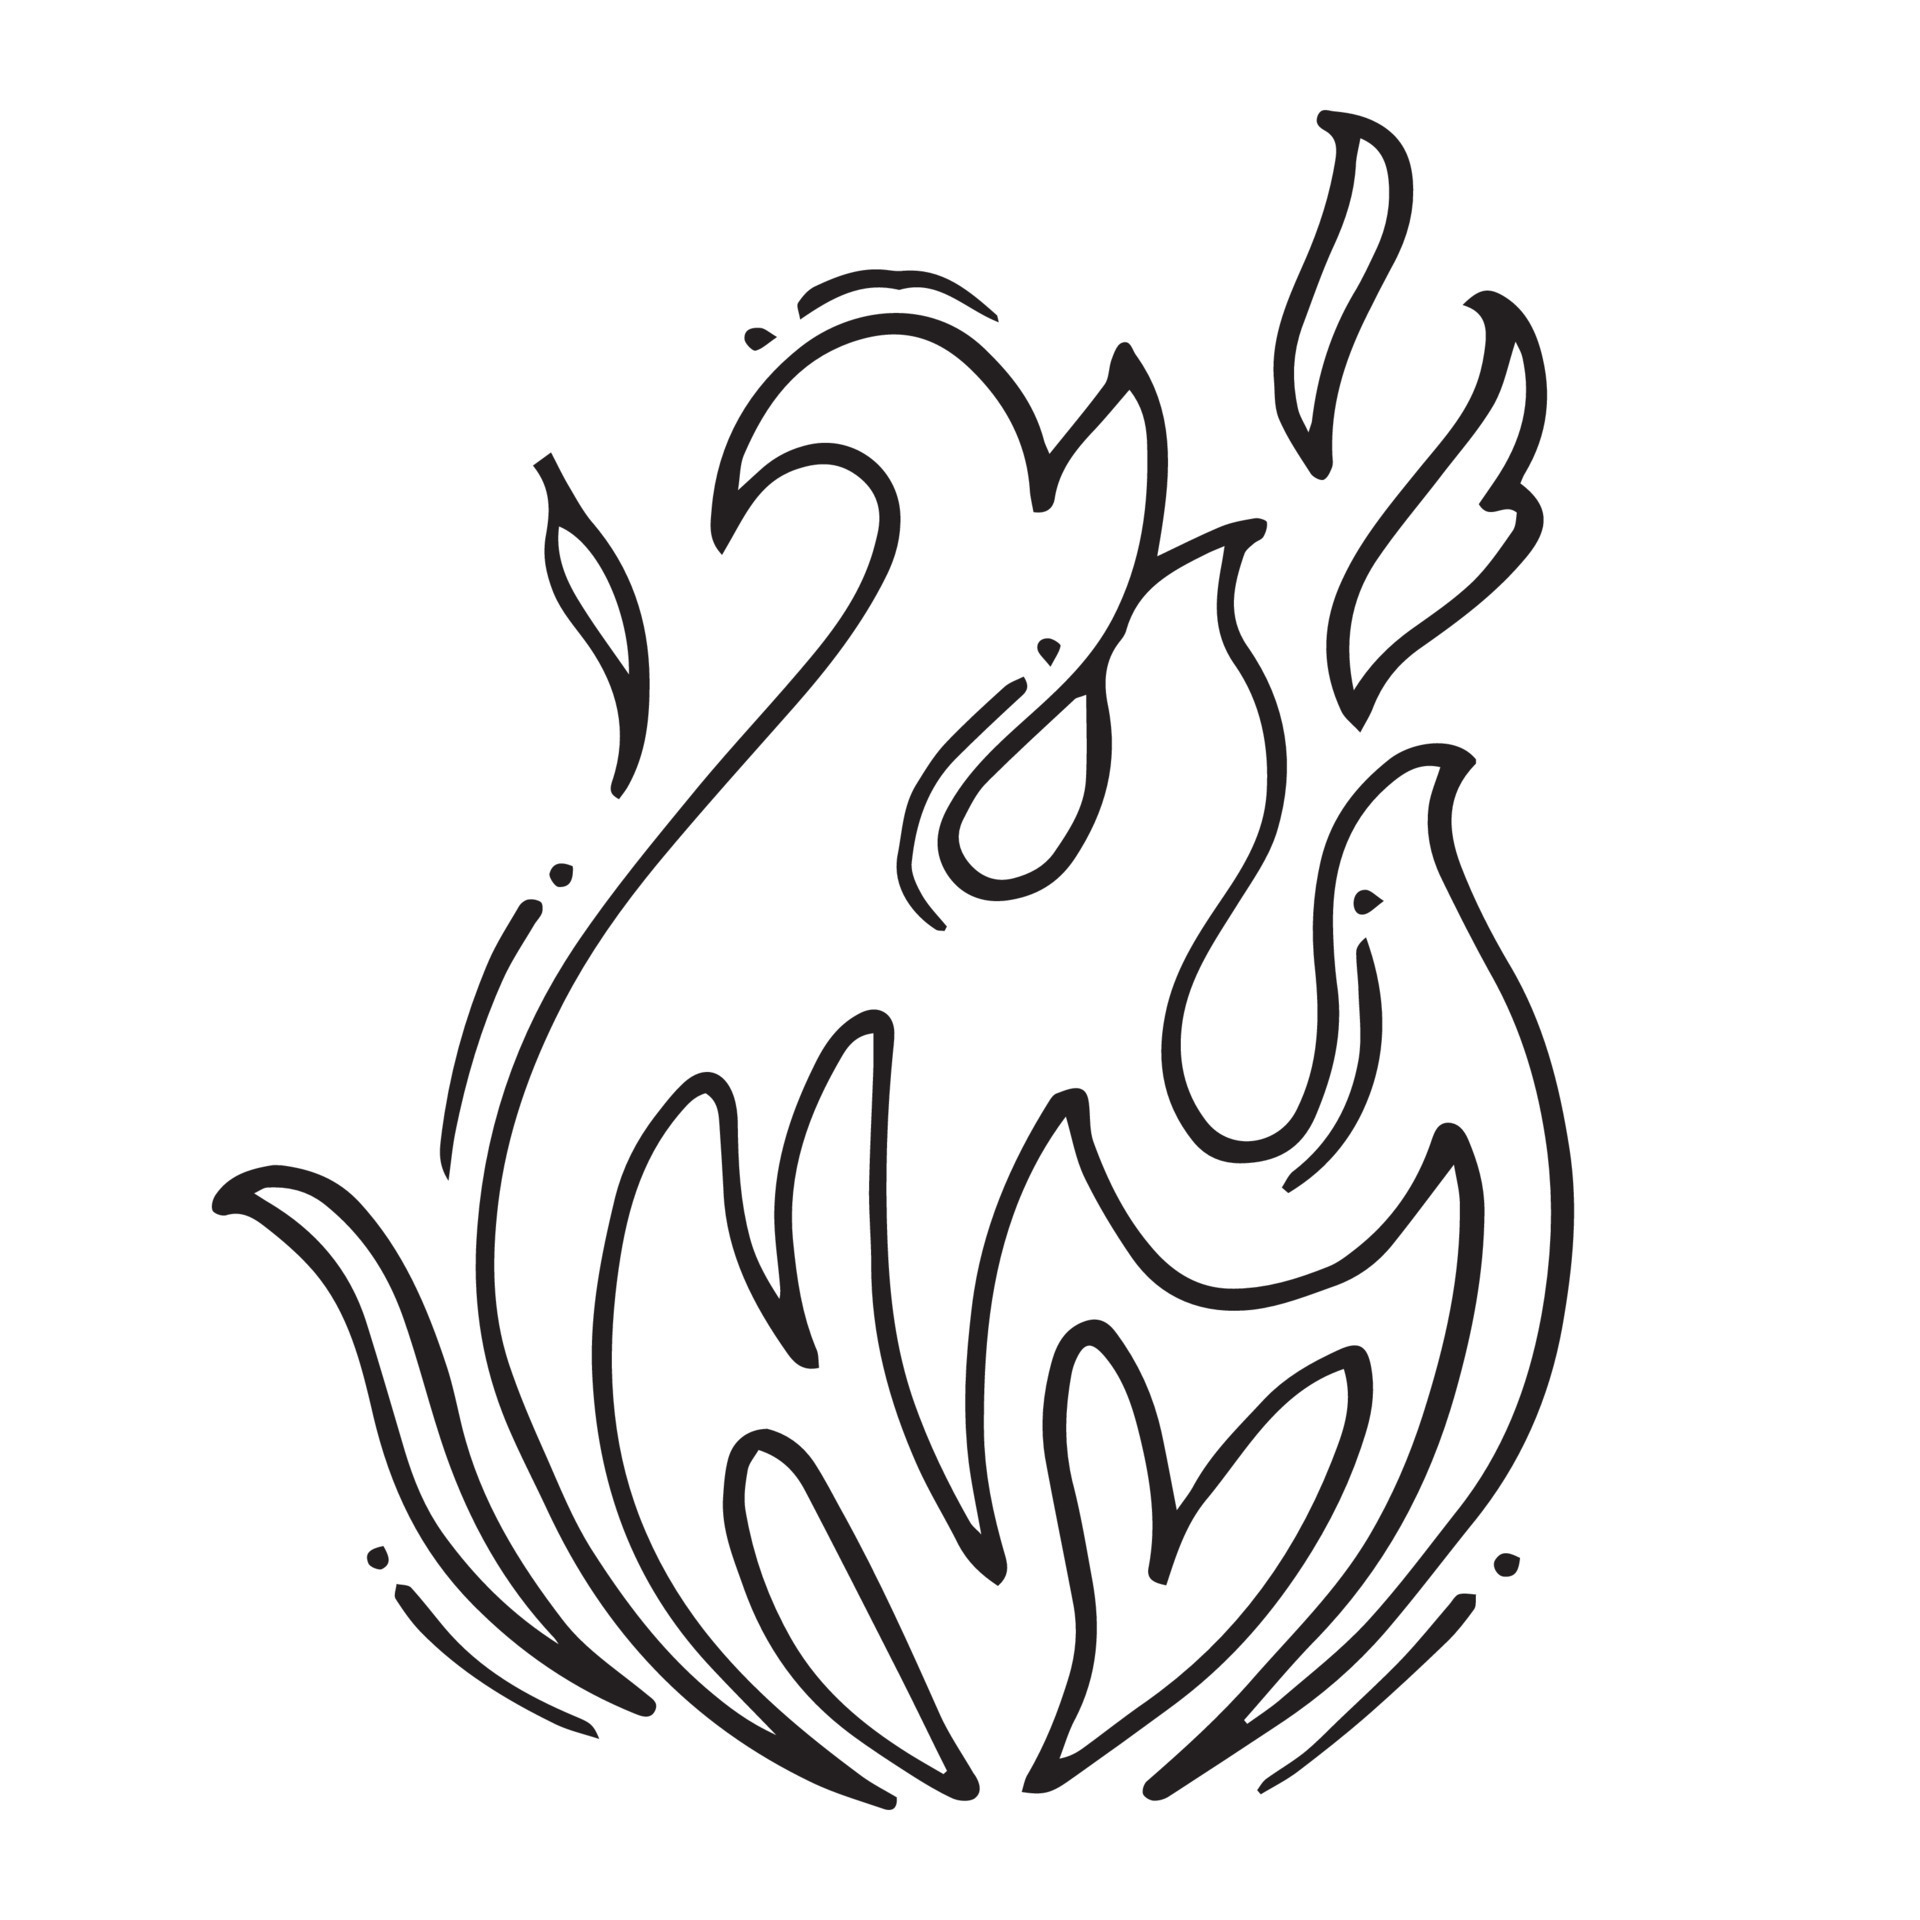 Garena freefire drawing||How to draw the garena freefire logo  easily||SultanA ProfessionallY ArtisT. - YouTube